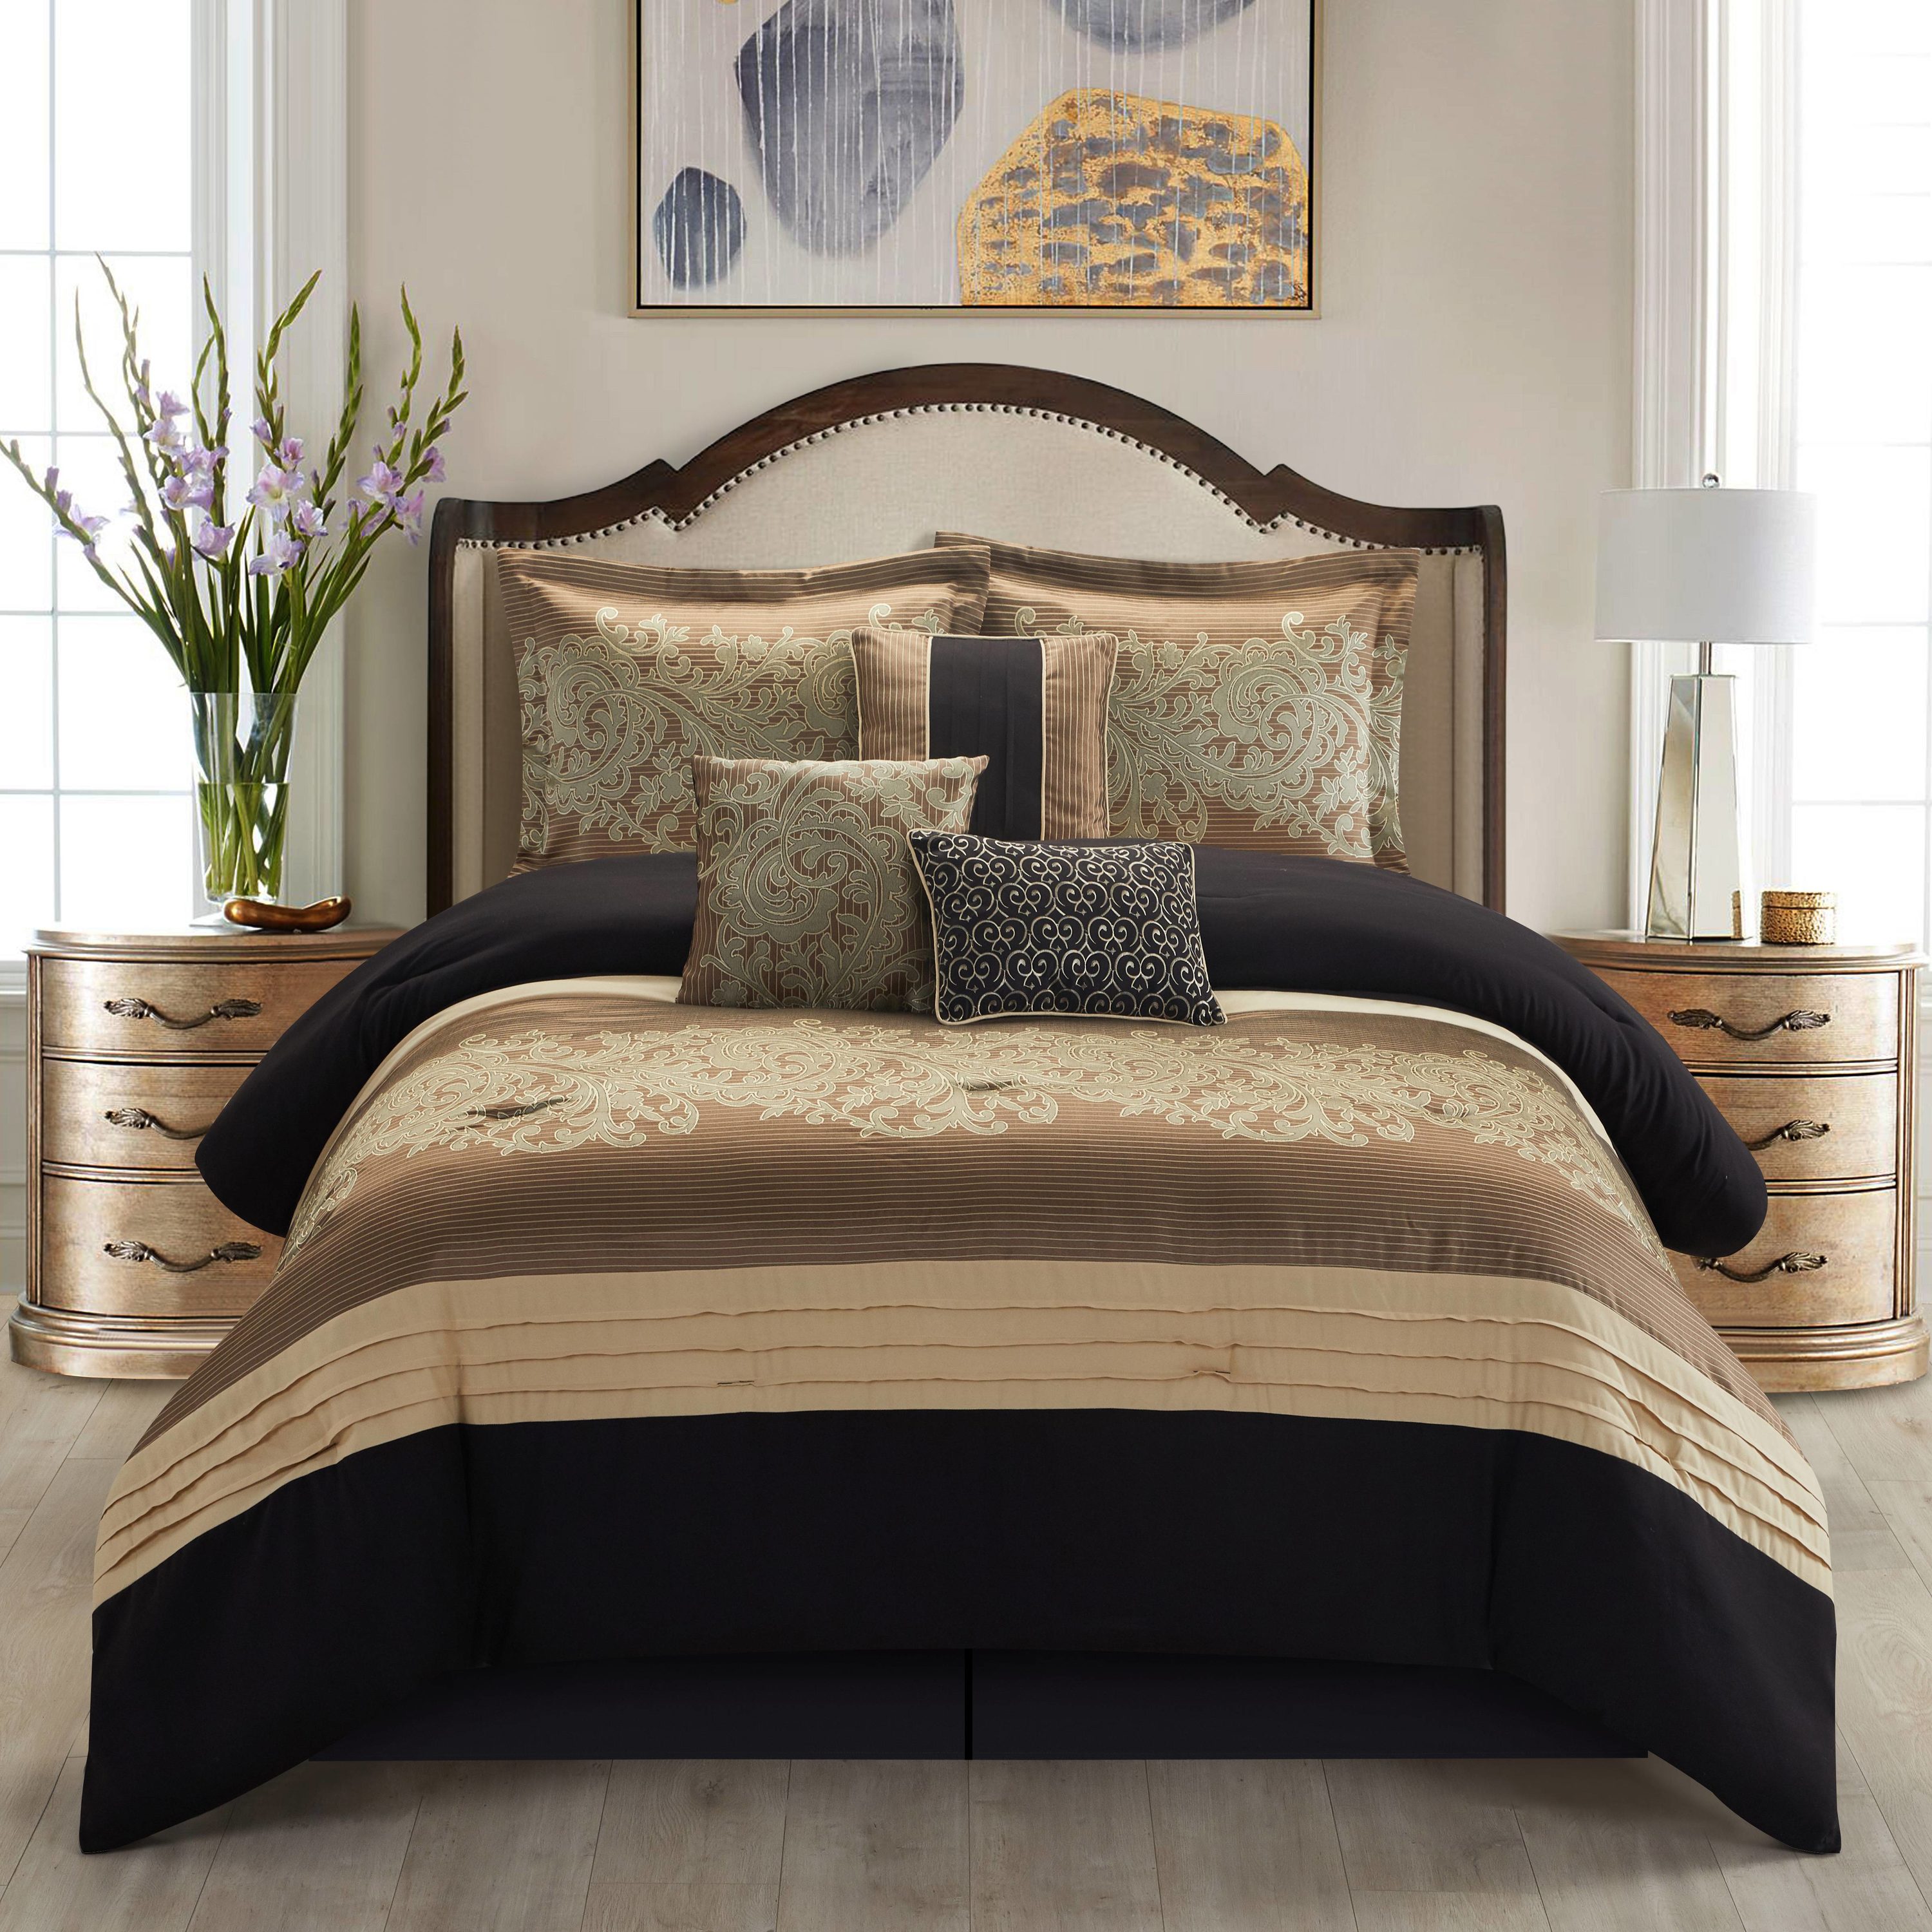 Grand Avenue 7-Piece Black/Gold King Comforter Set